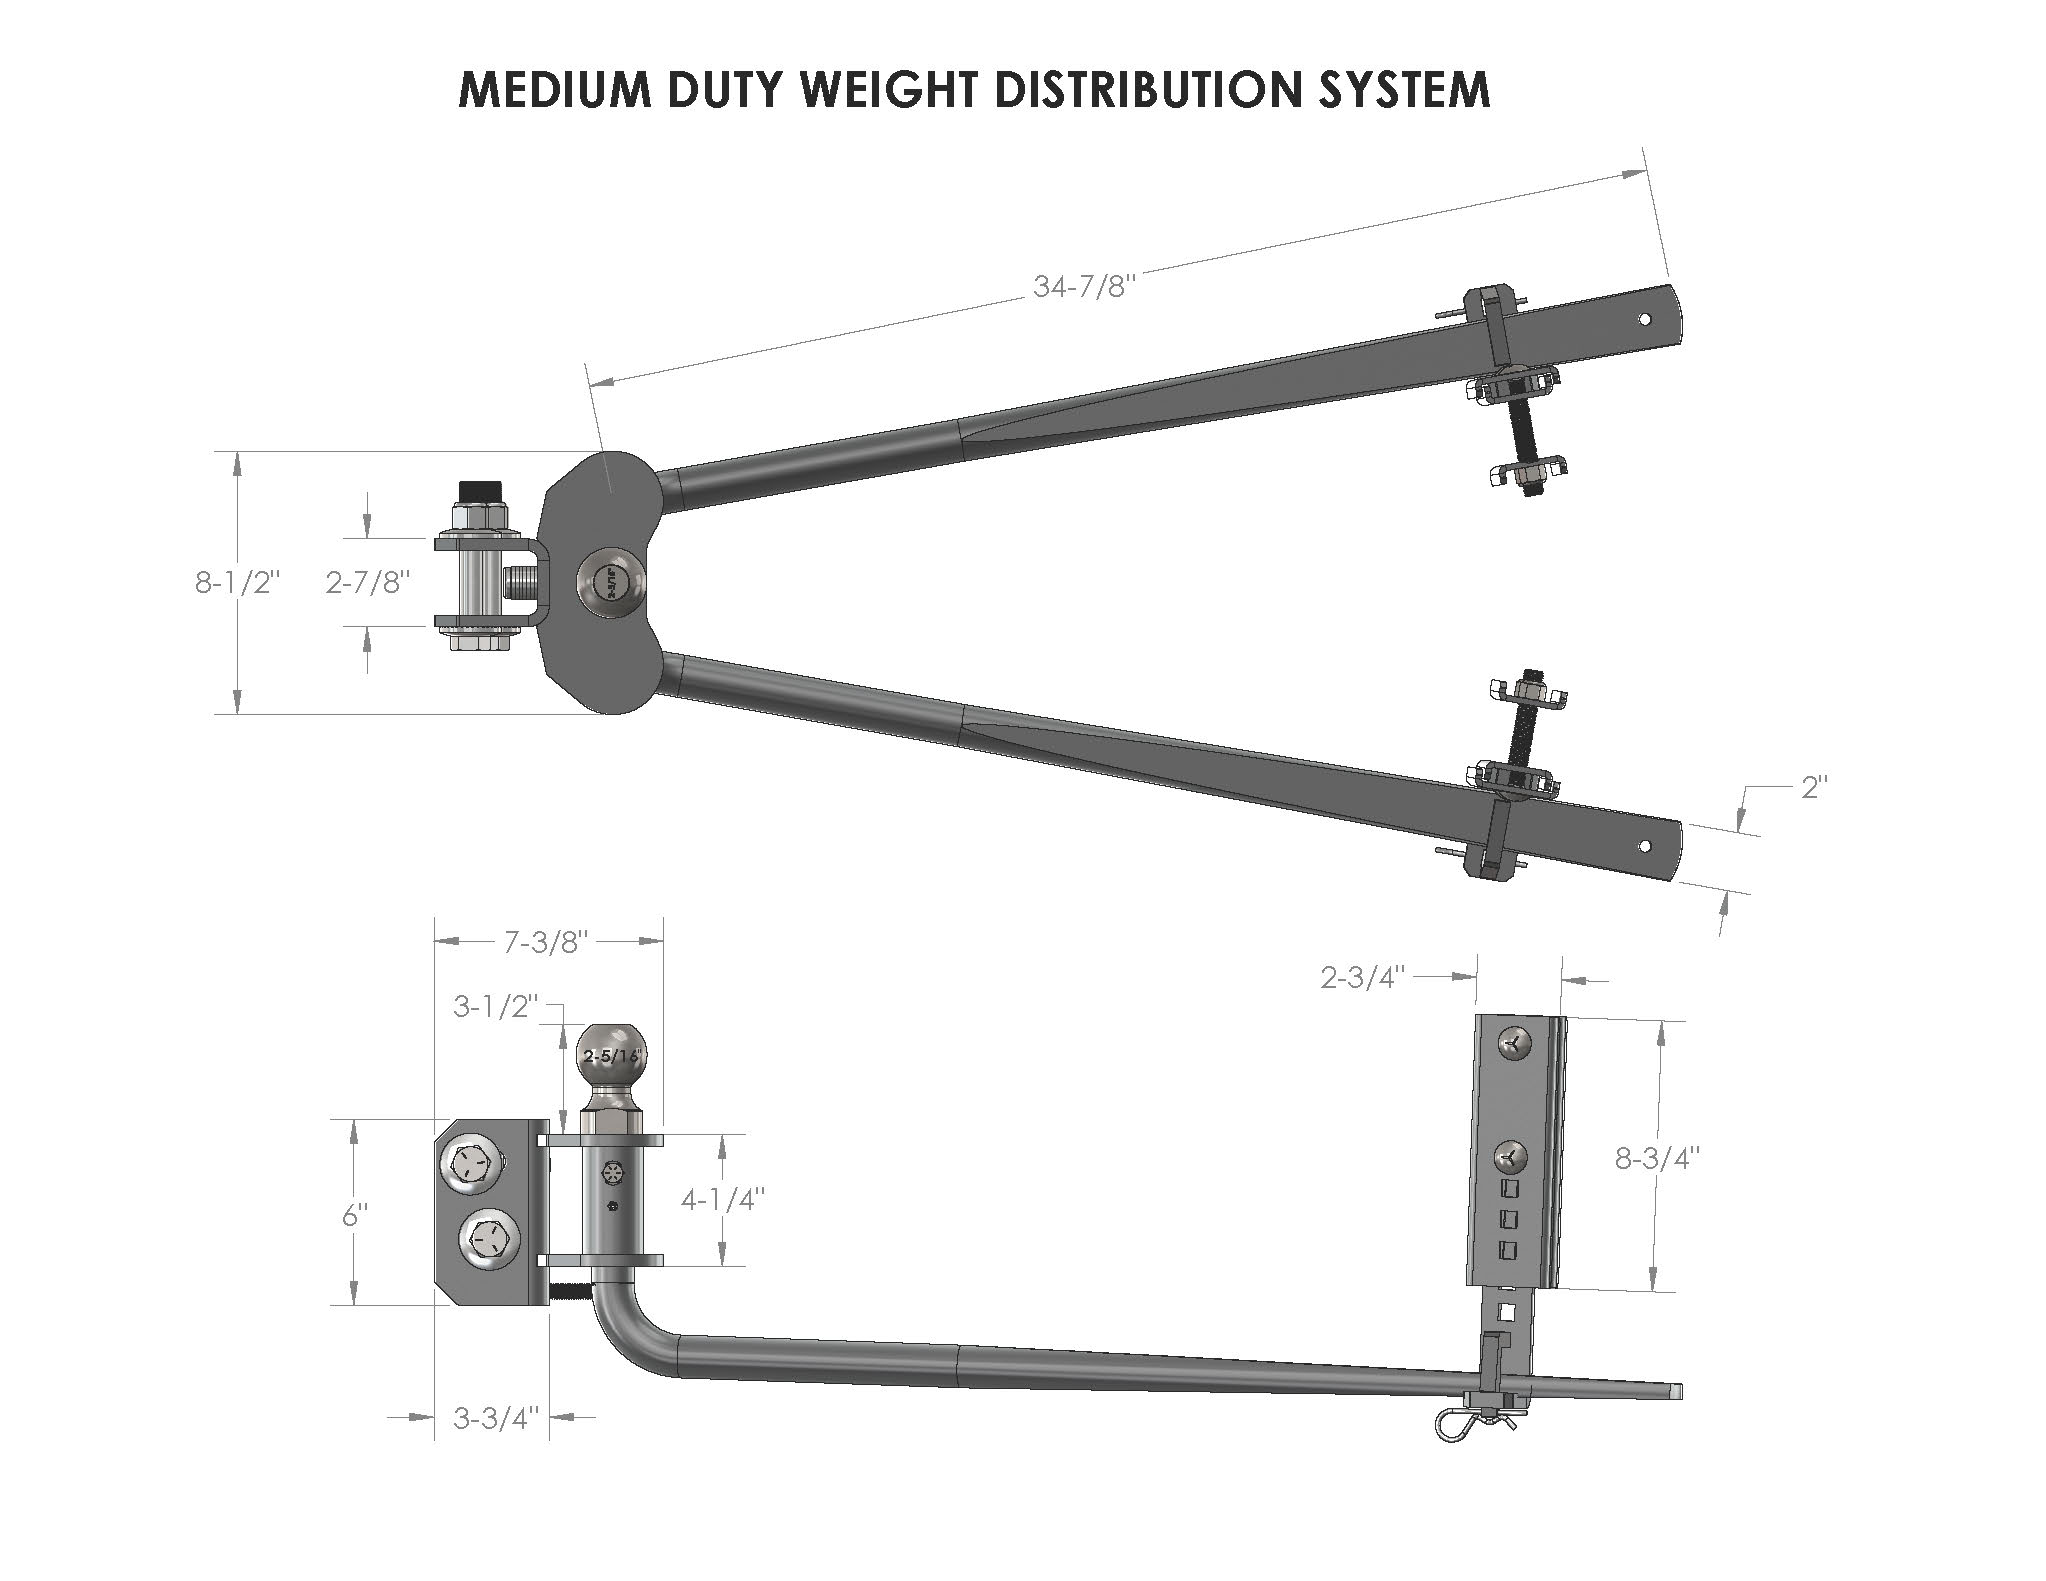 BulletProof Medium Duty Weight Distribution specs